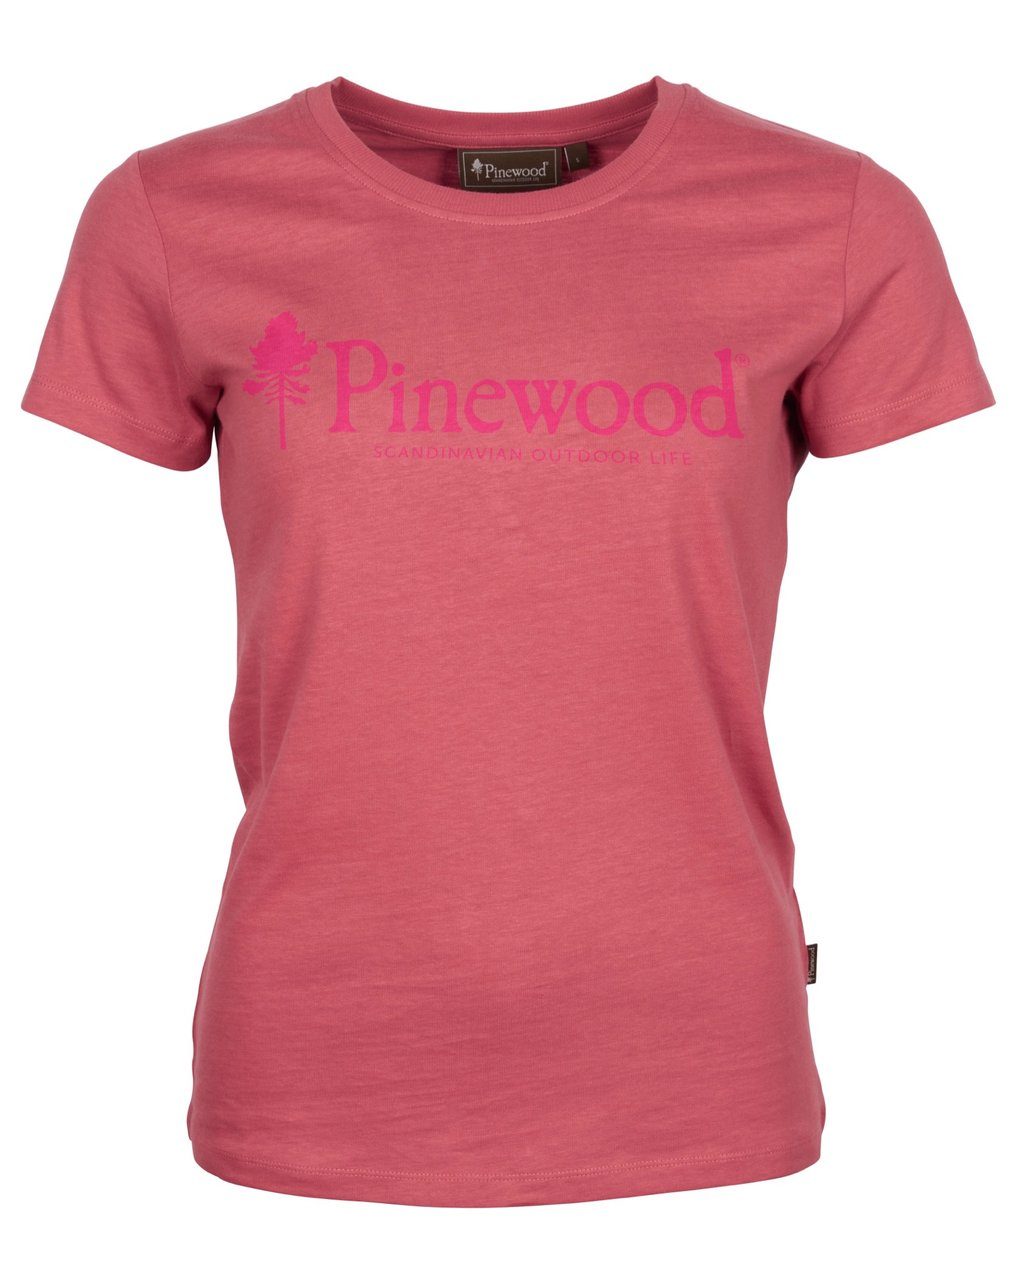 3445 814 01 Pinewood Outdoor Life T Shirt Womens Pink Hot Pink